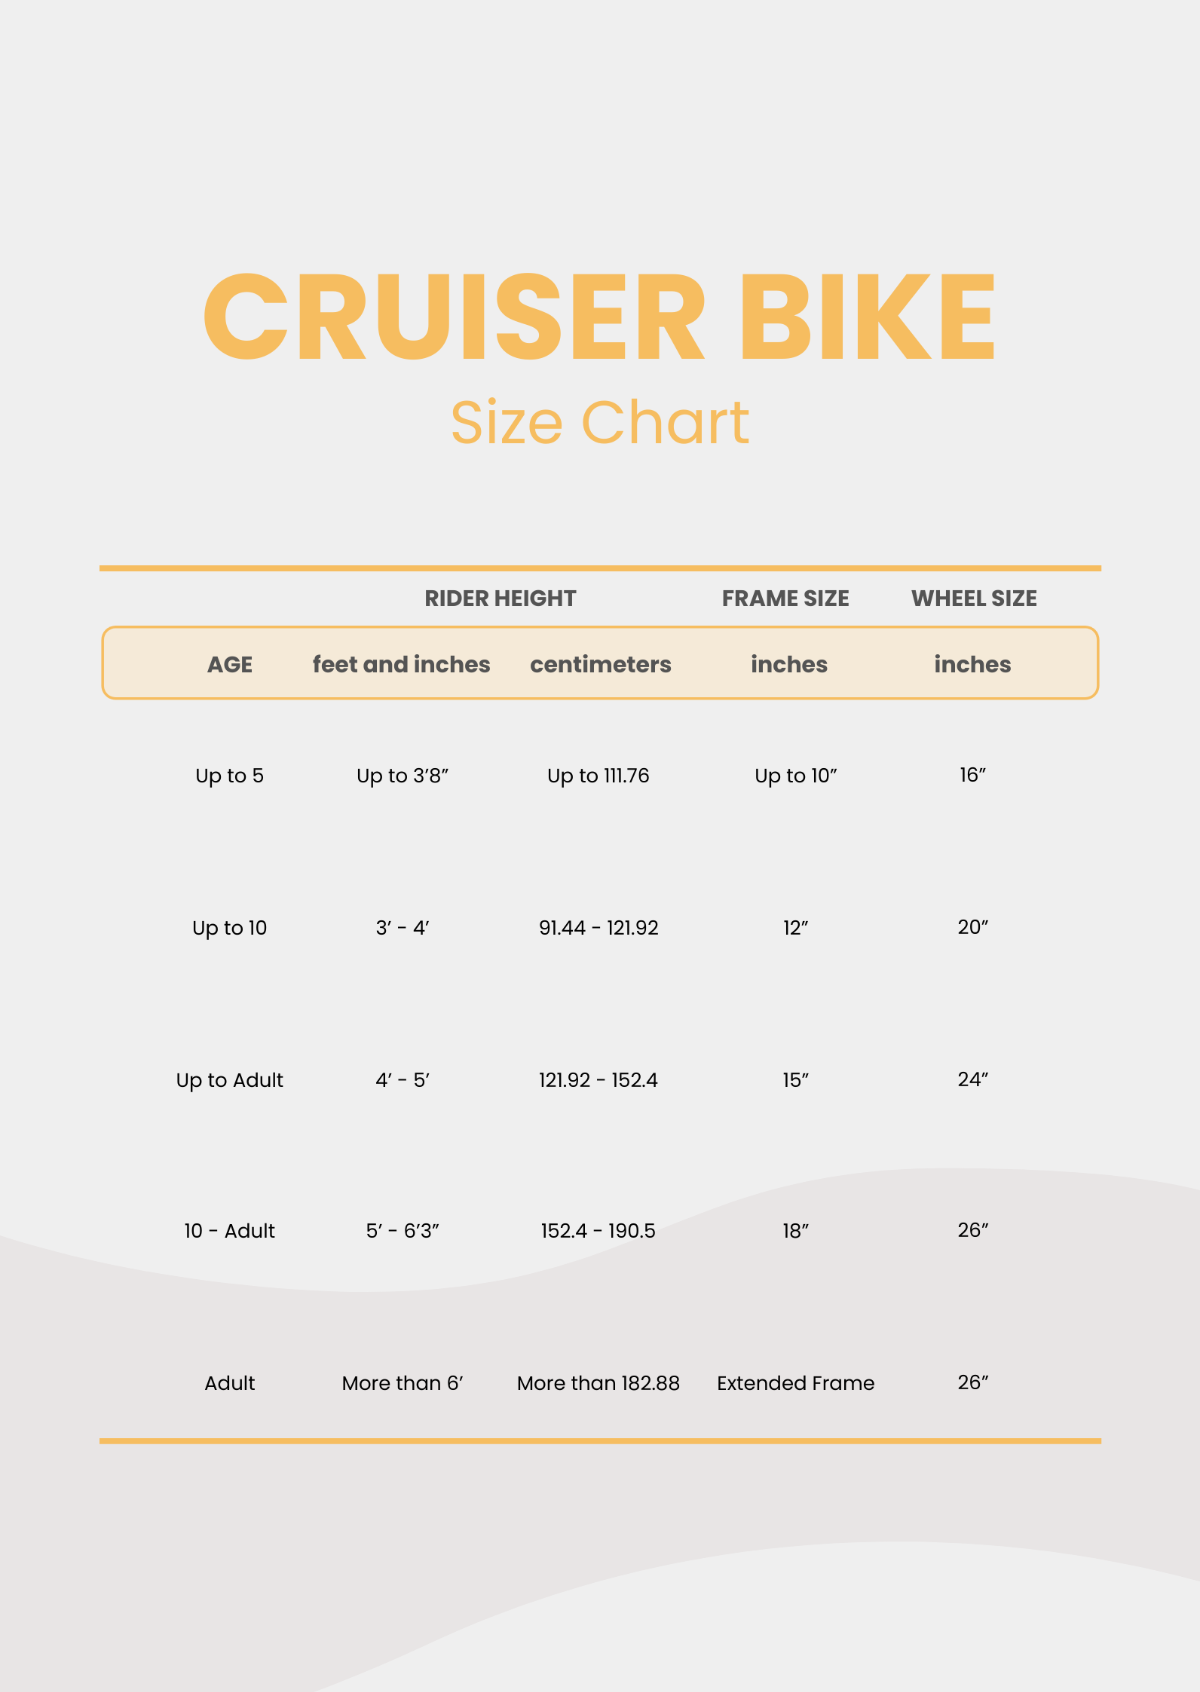 Cruiser Bike Size Chart Template